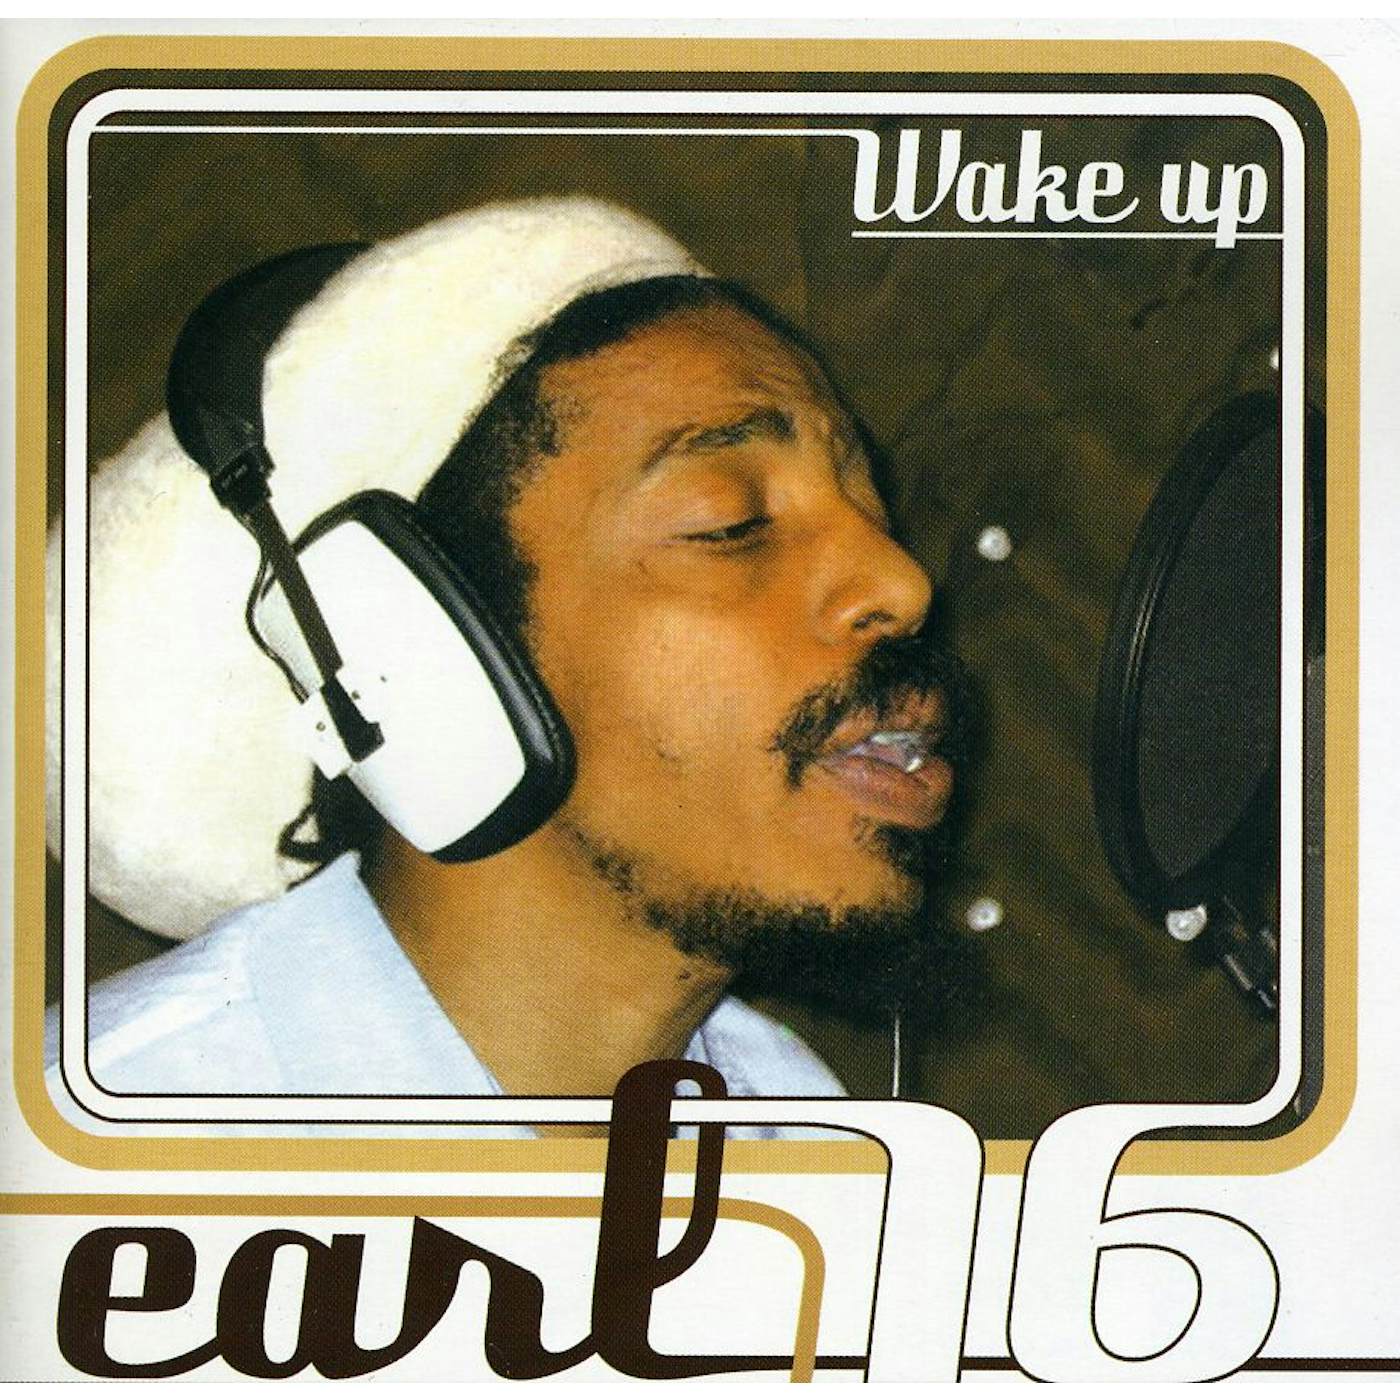 Earl Sixteen WAKE UP CD